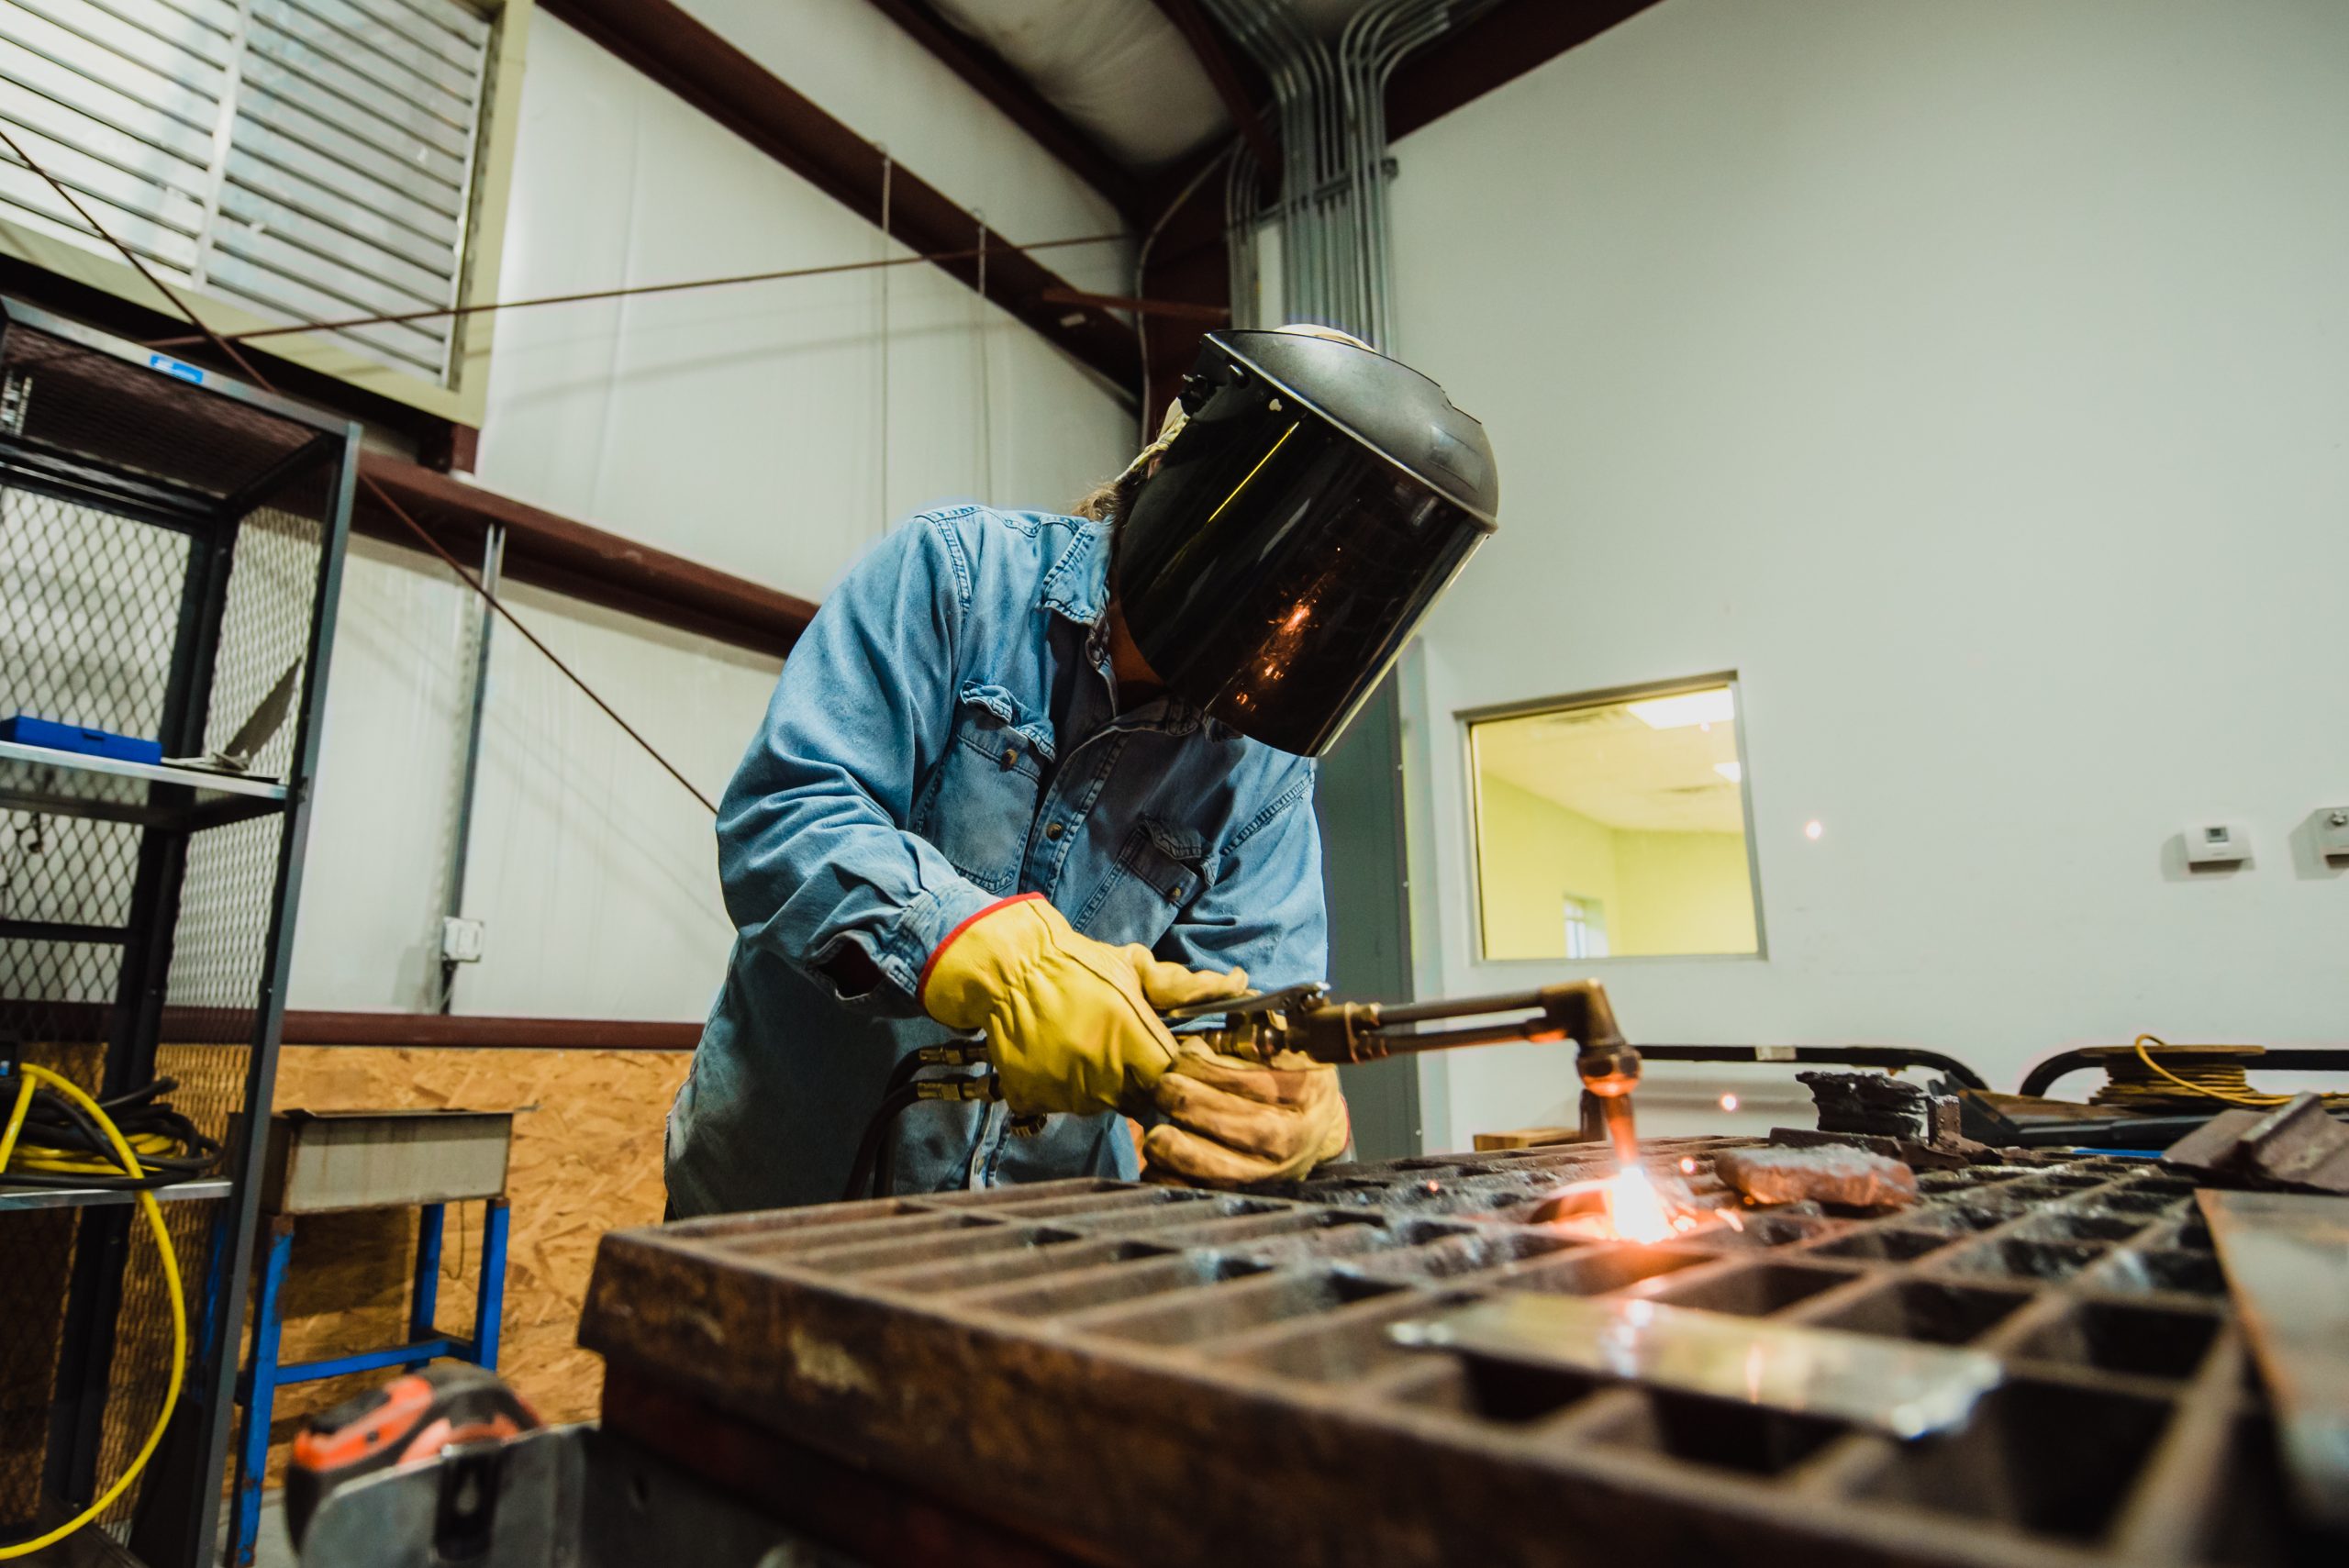 North Carolina among top five states to see manufacturing job growth